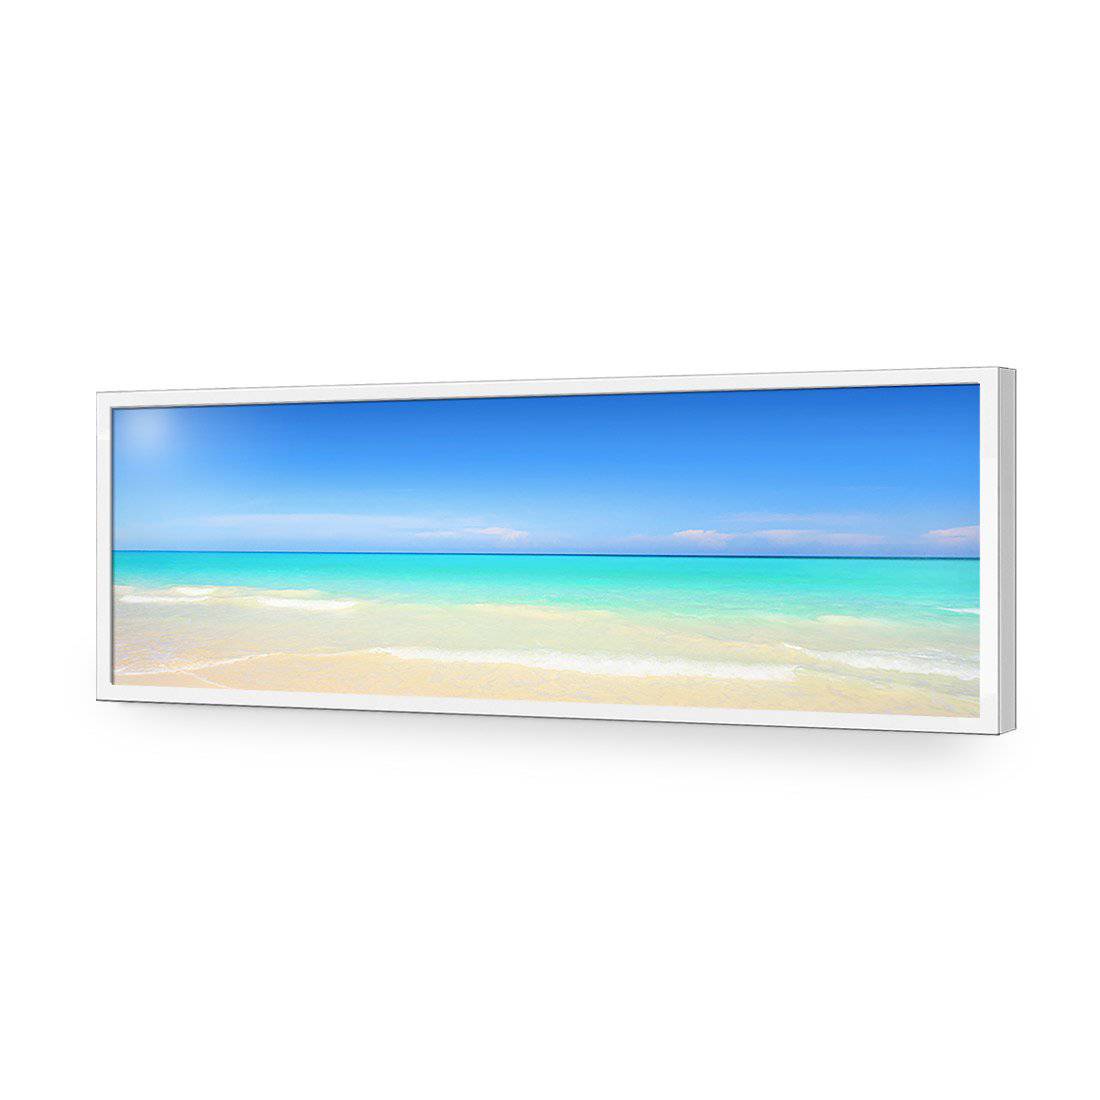 Paradise Beach, Long-Acrylic-Wall Art Design-Without Border-Acrylic - White Frame-60x20cm-Wall Art Designs